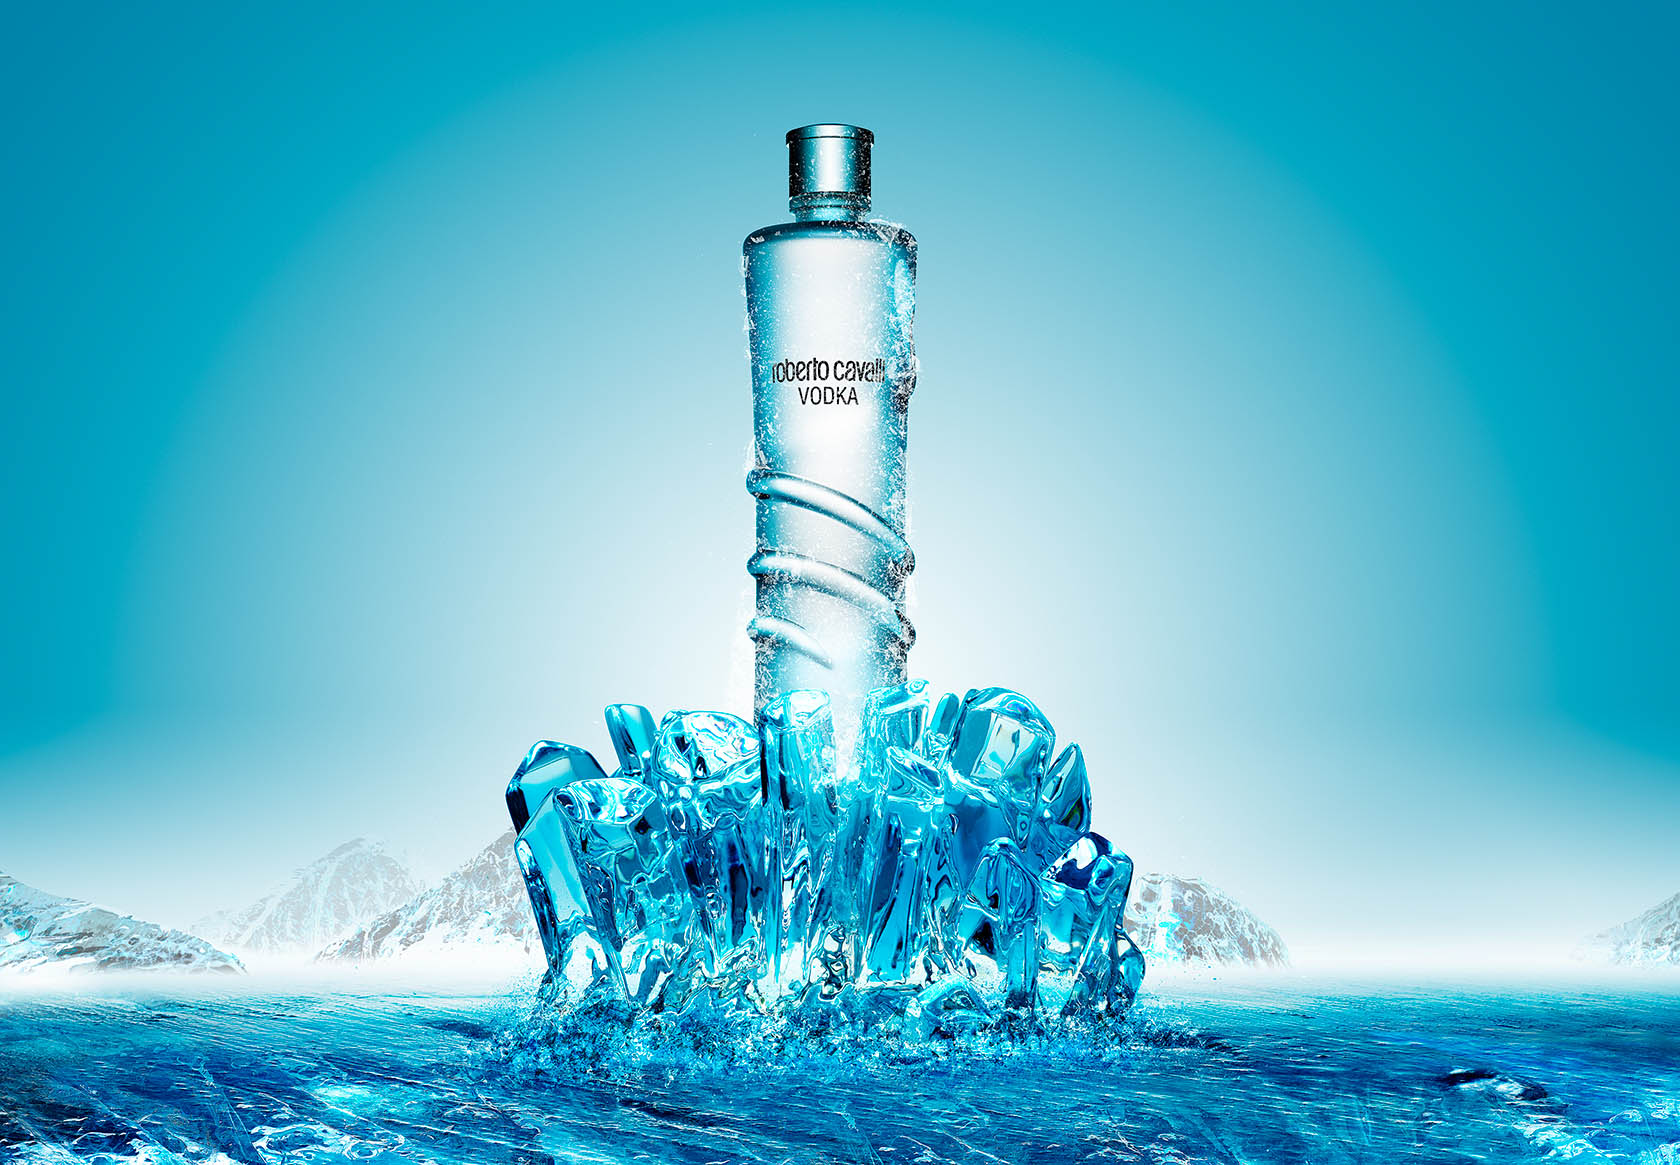 Packshot Factory - Creative Still Life Product Photography Retouching - Roberto  Cavalli wodka bottle